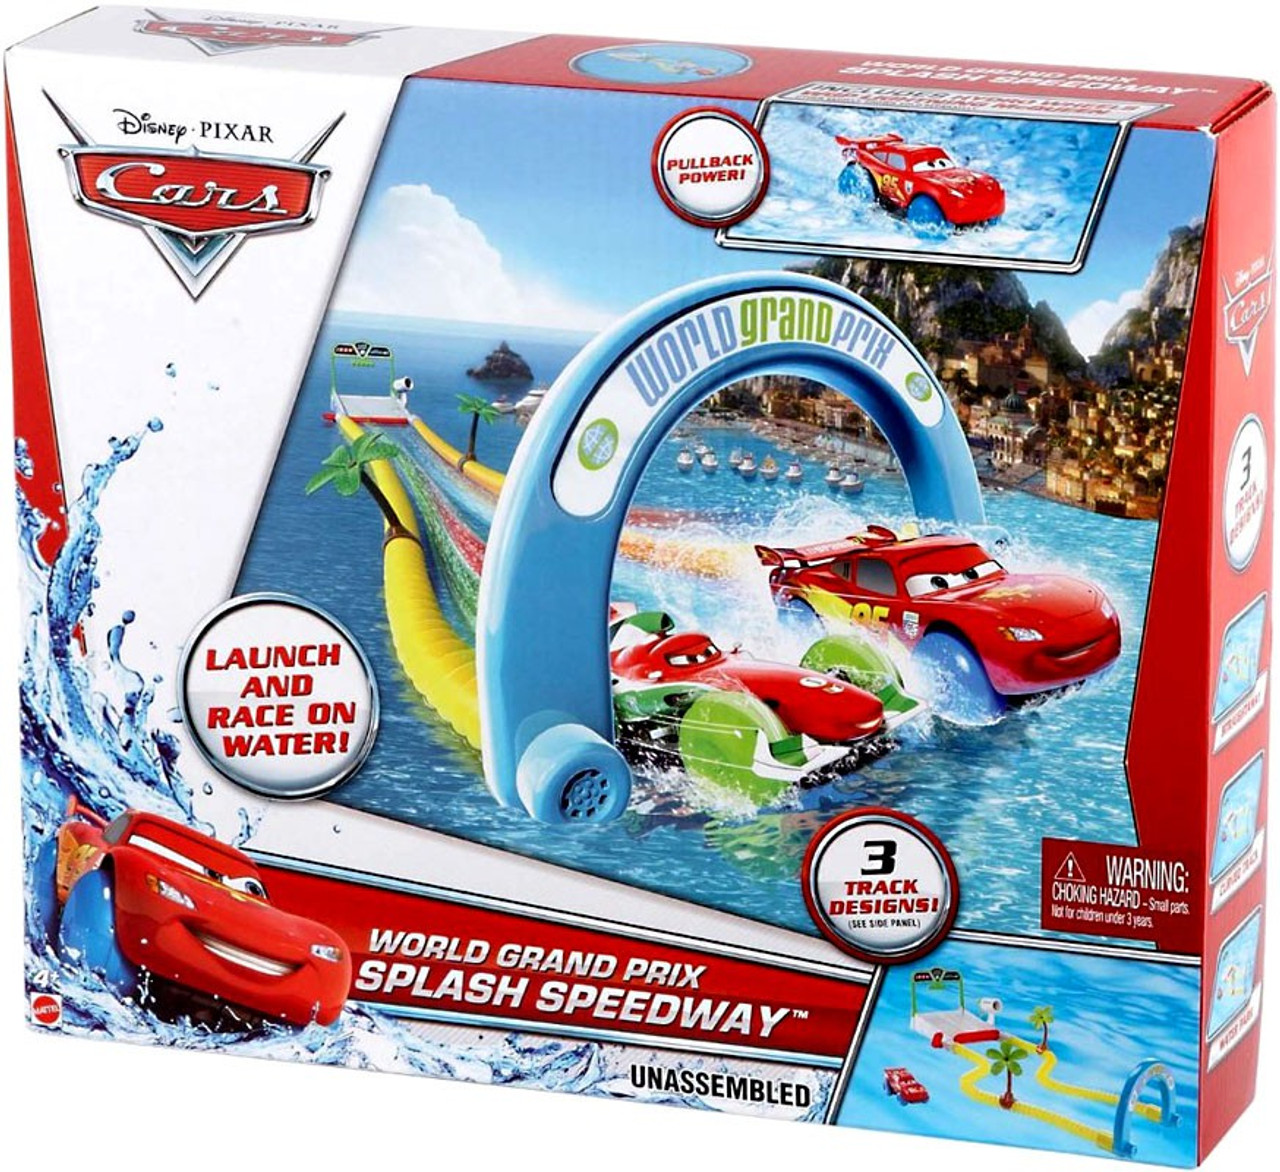 Disney Pixar Cars Playsets World Grand Prix Splash Speedway Playset Mattel Toys Toywiz